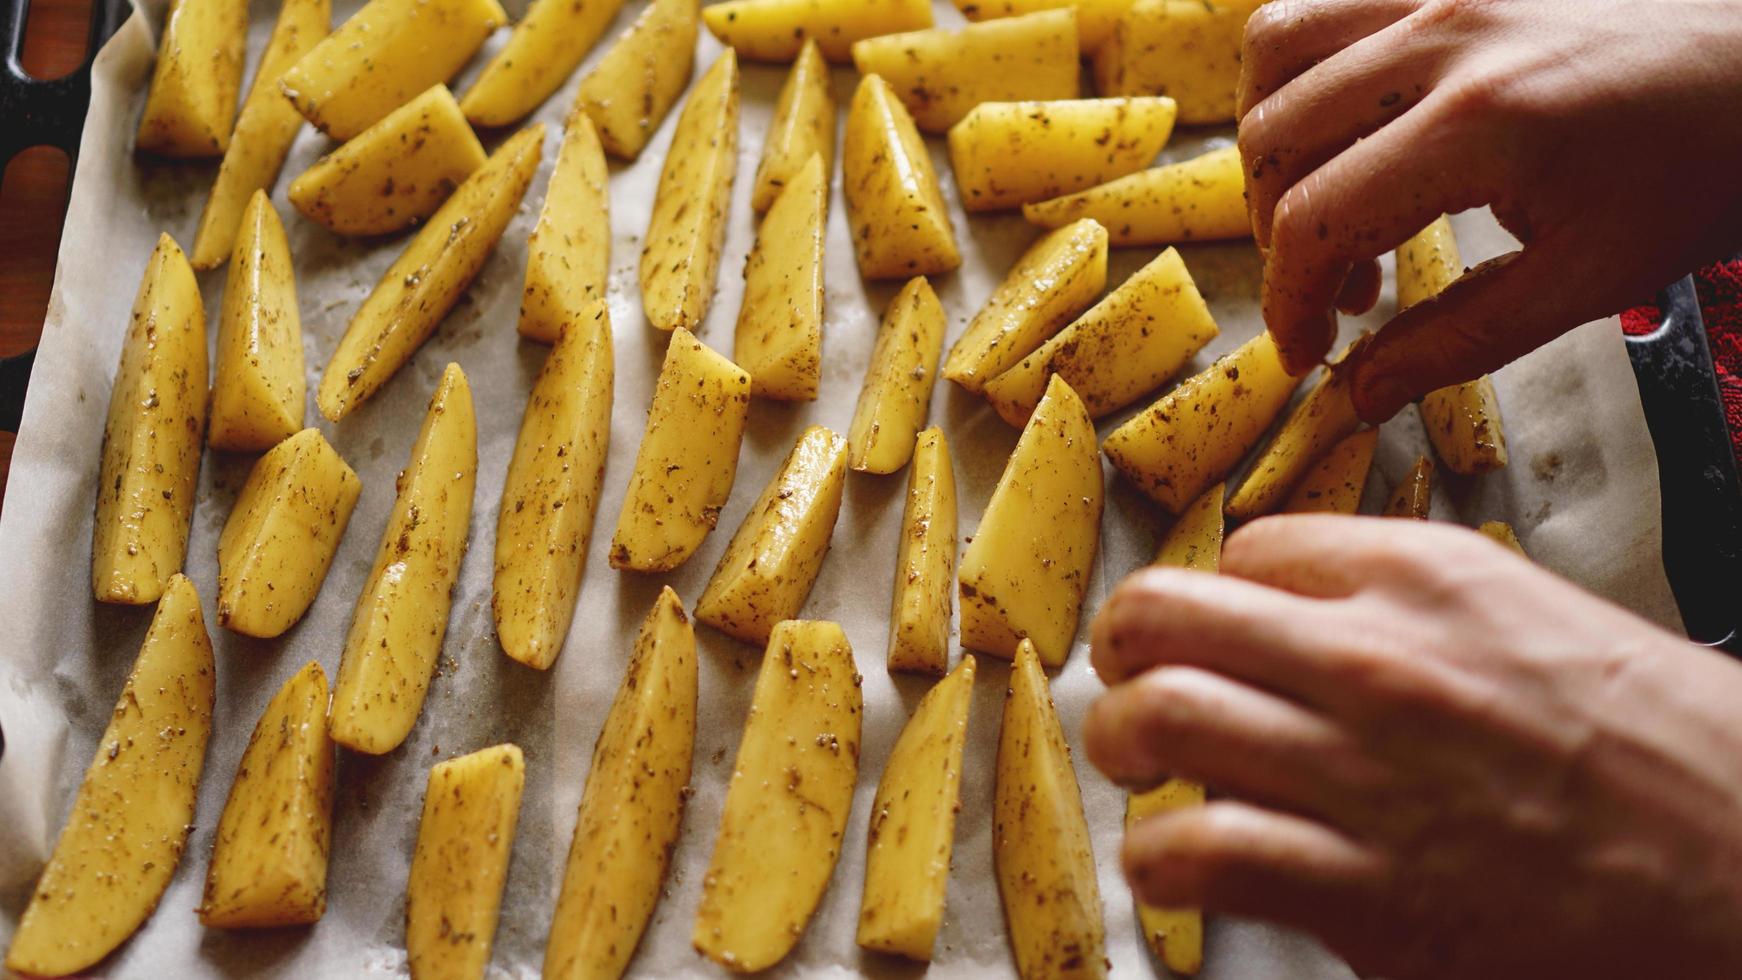 Hands - Sliced raw potatoes on a baking sheet photo